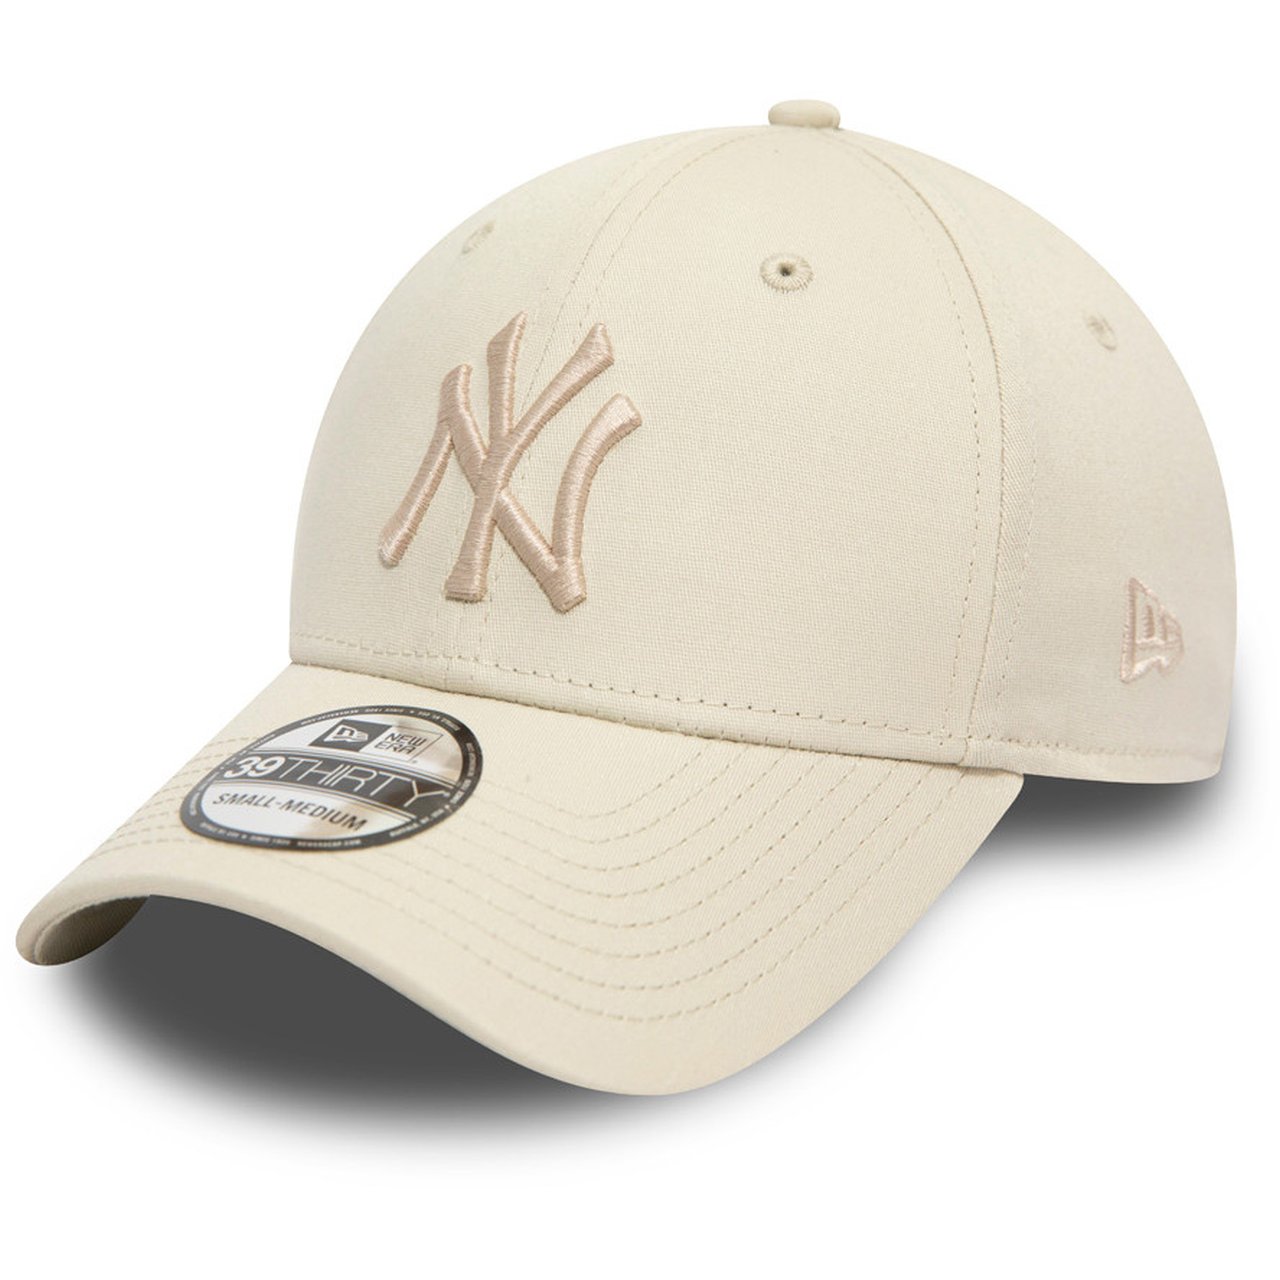 La Clippers Graphite Shadow Tech 39THIRTY Flex Hat